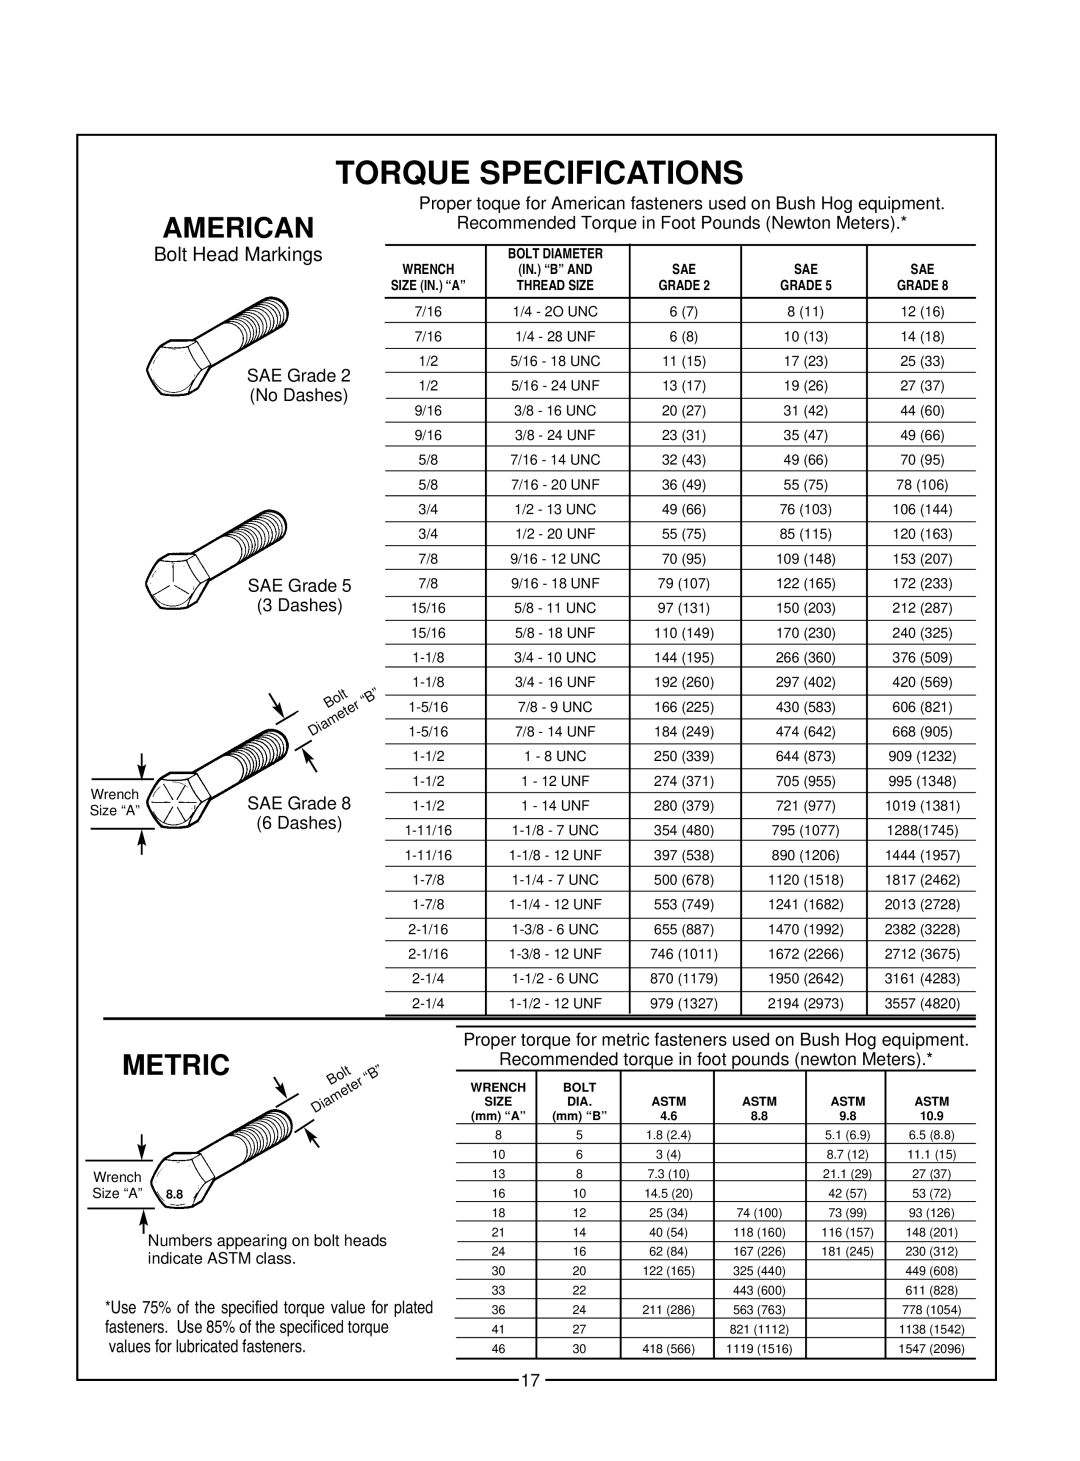 Bush Hog 306, 305 manual Torque Specifications, American, Metric 